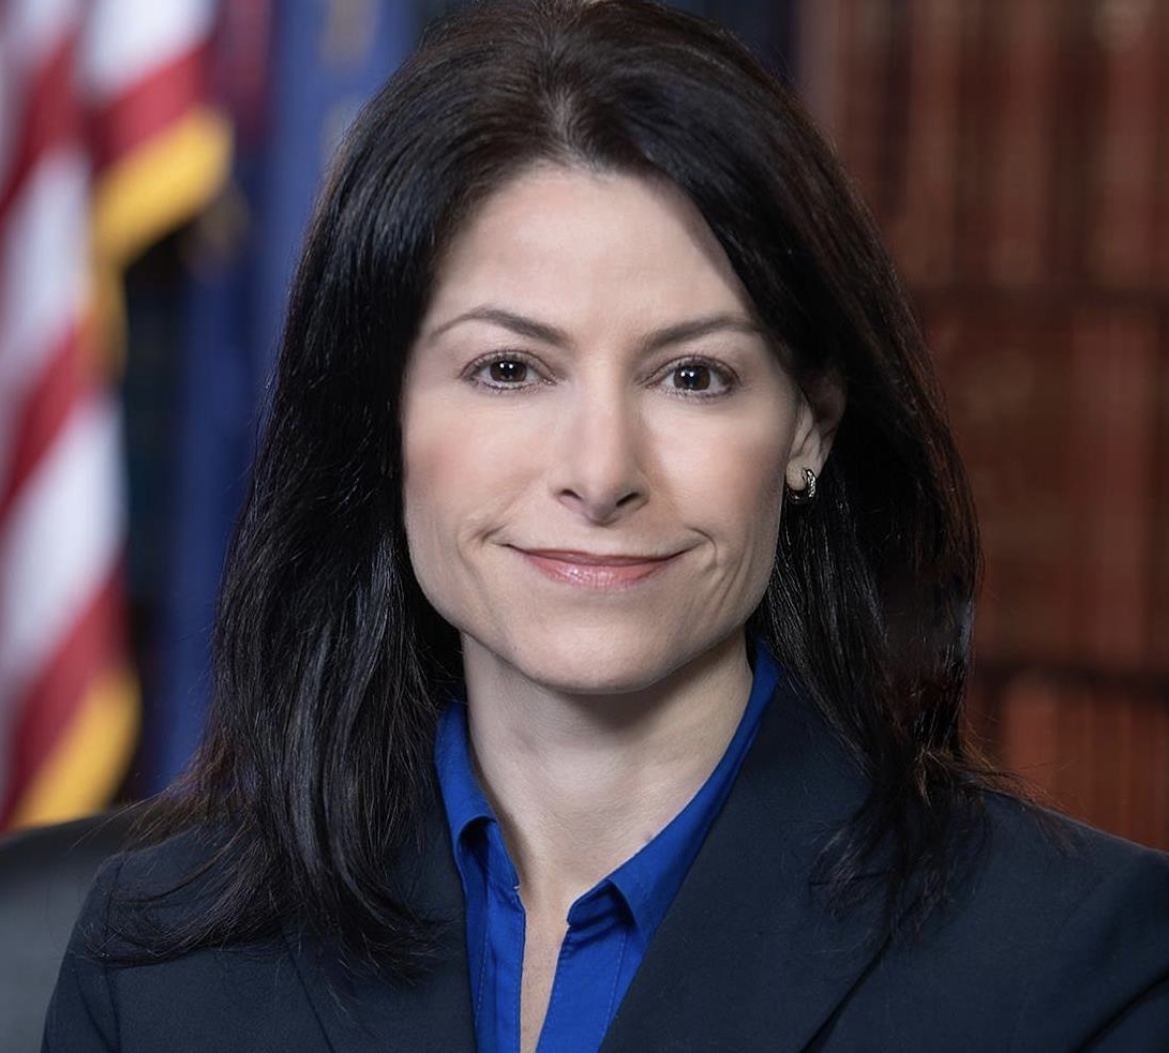 Michigan Attorney General Dana Nessel